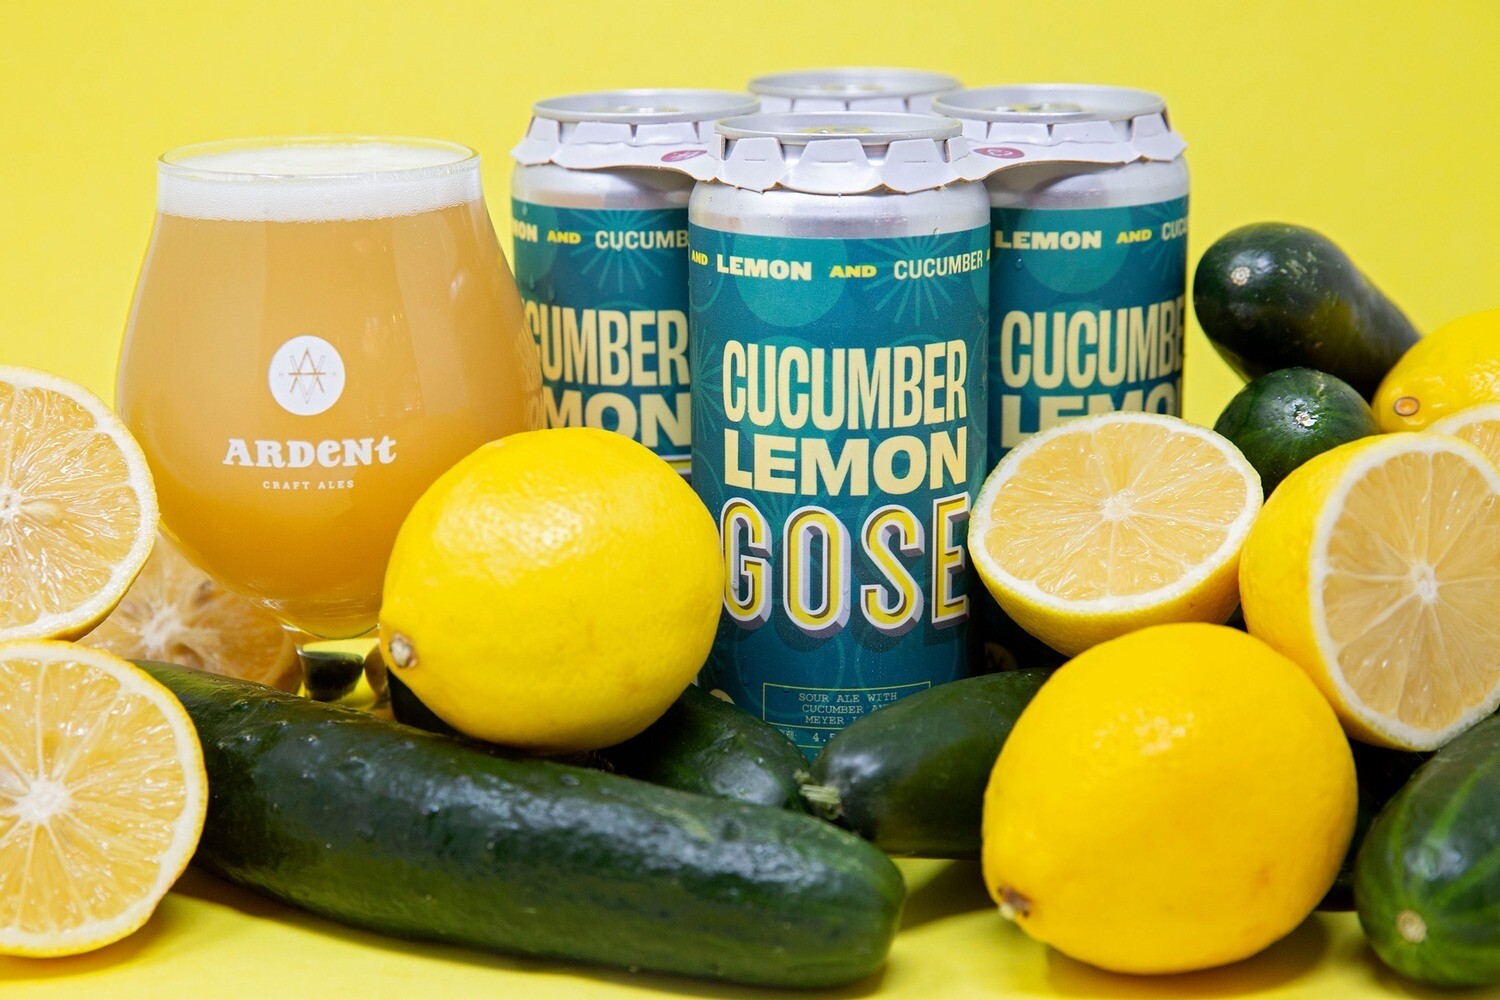 Ardent Craft Ales Cucumber Lemon Gose (4-PACK)